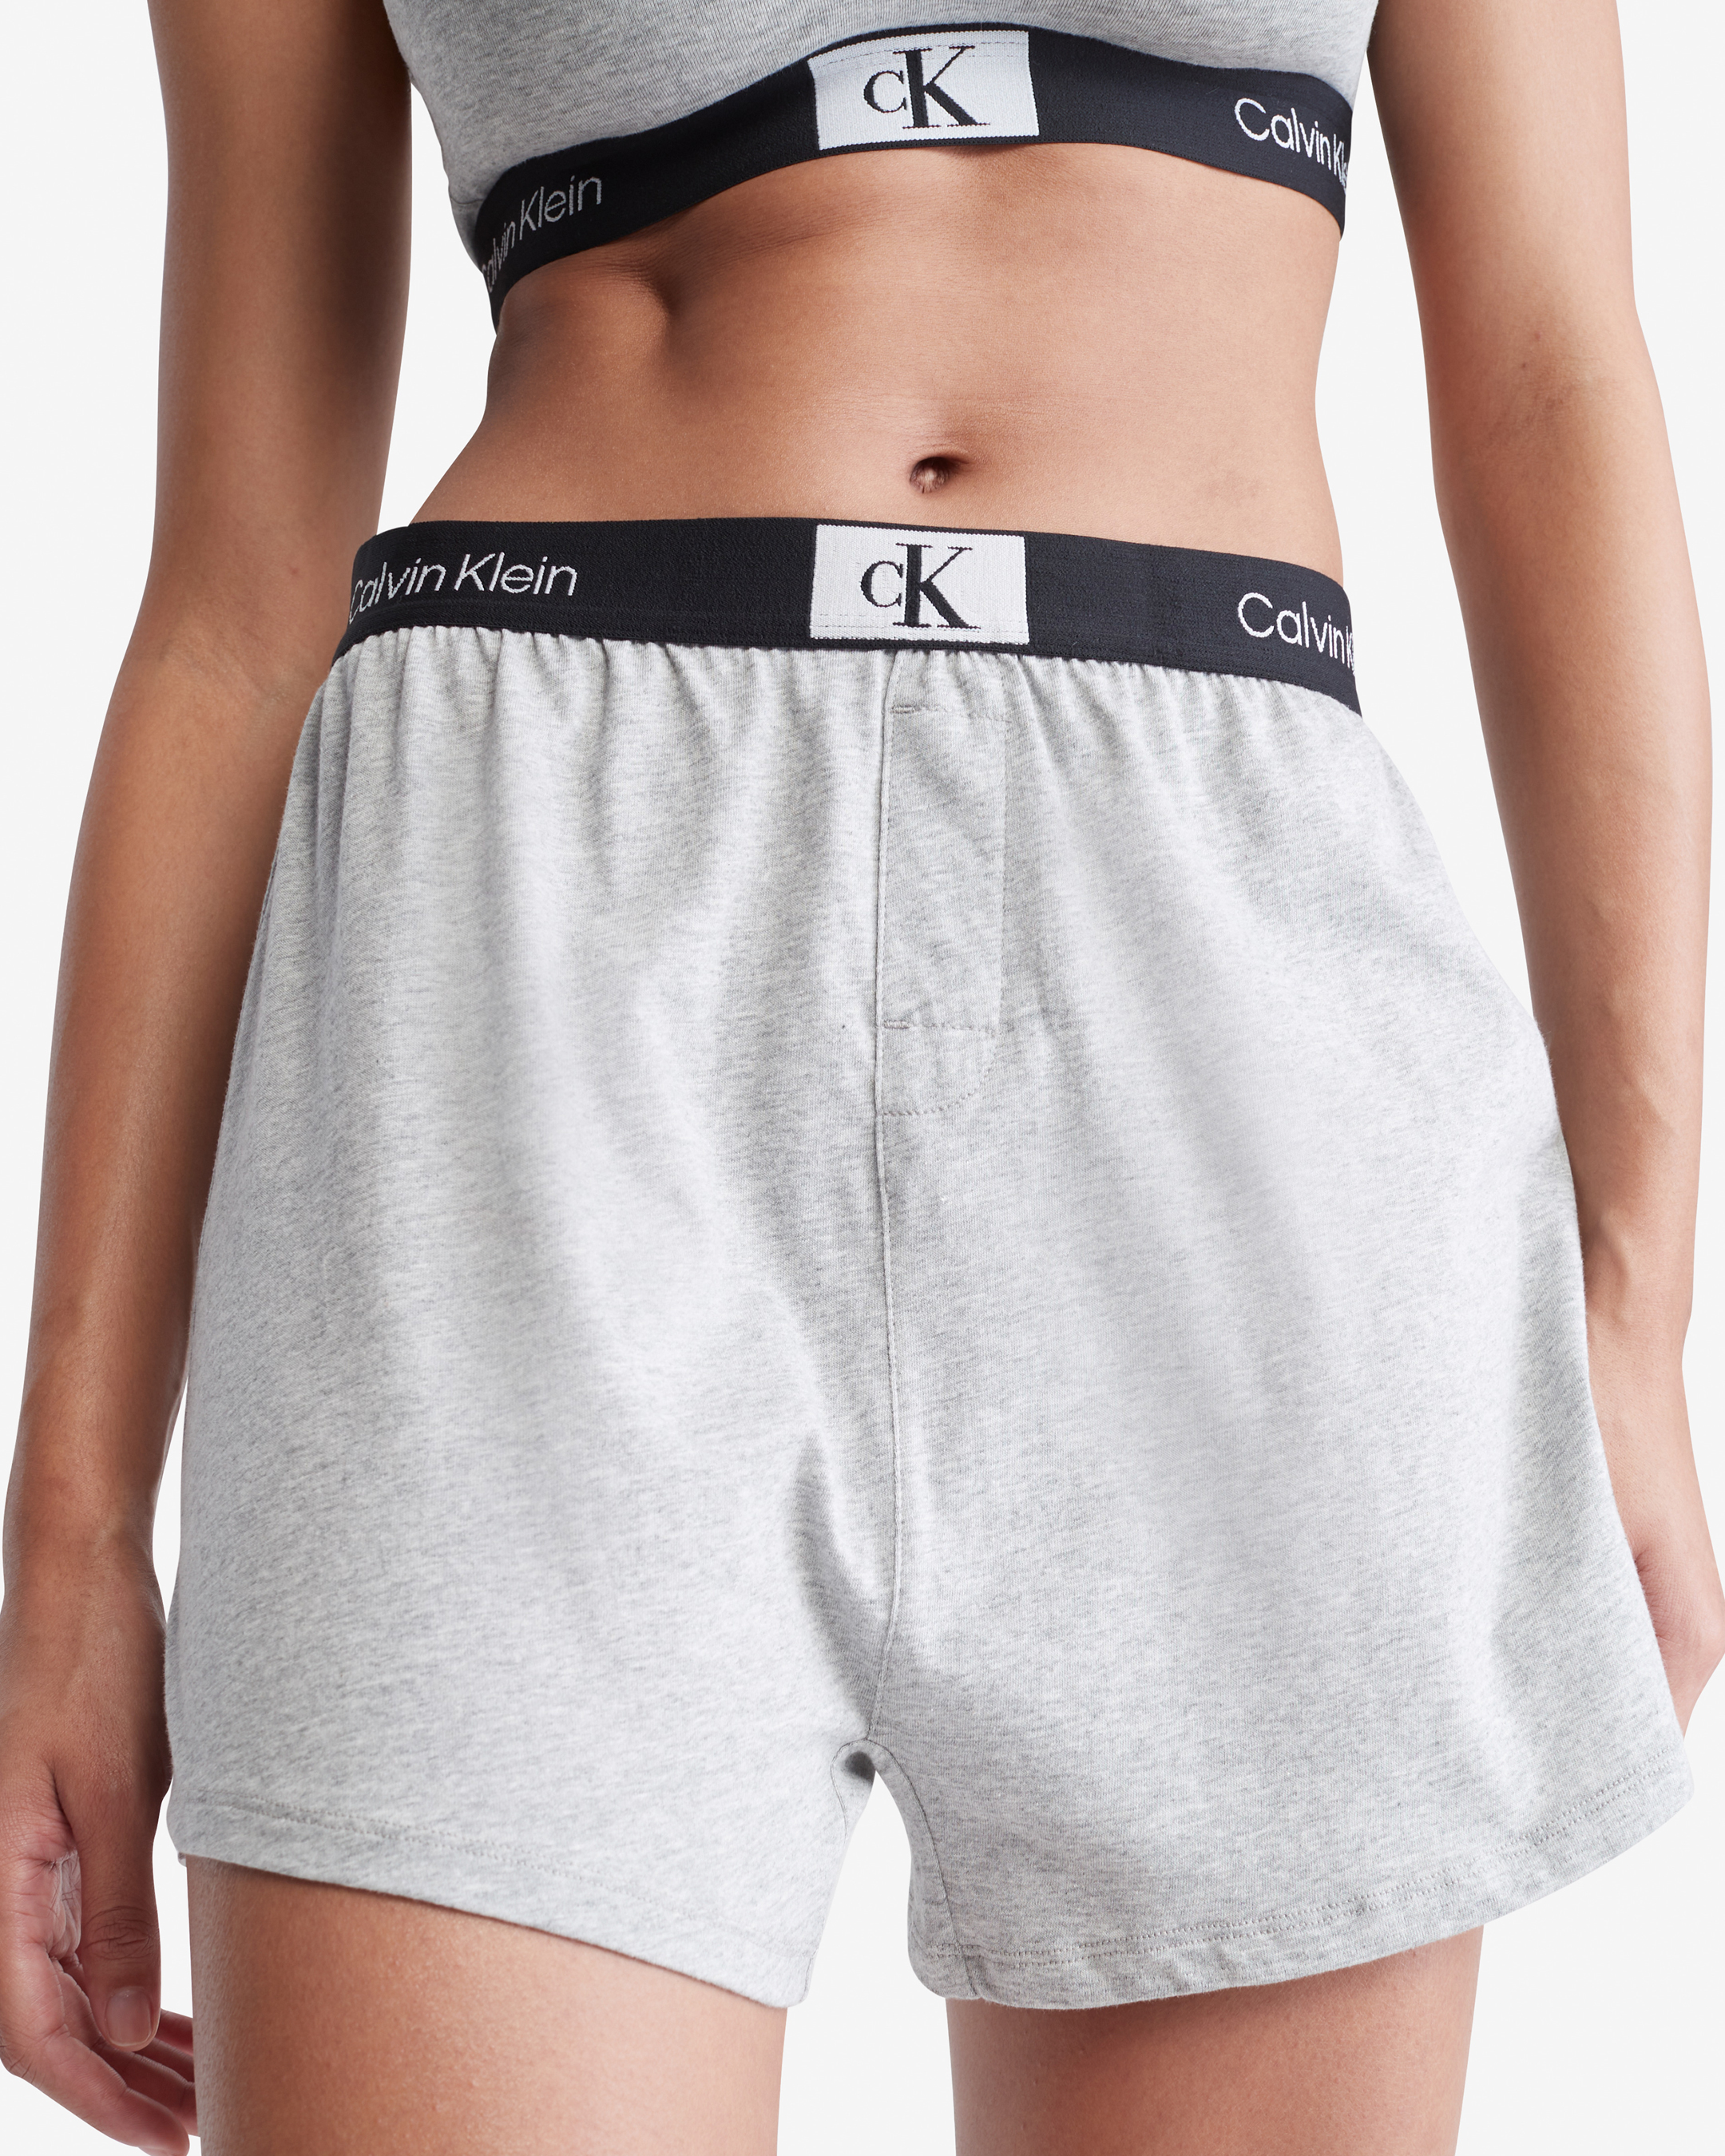 Calvin Klein Womens Sleep Shorts on Sale | medialit.org